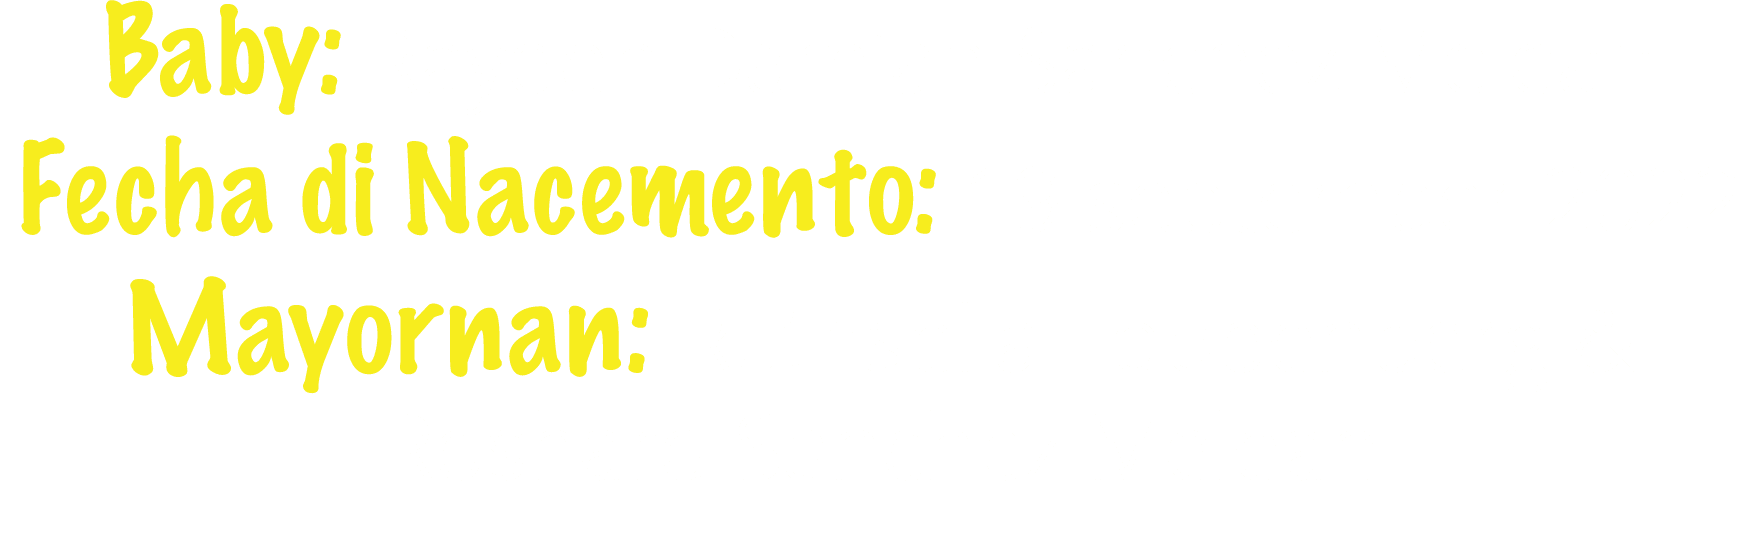 Baby: Rayden Damian Sanchez Melean Fecha di Nacemento: 19 september 2022 Mayornan: Ruthsella Toppenberg & Roshard San...